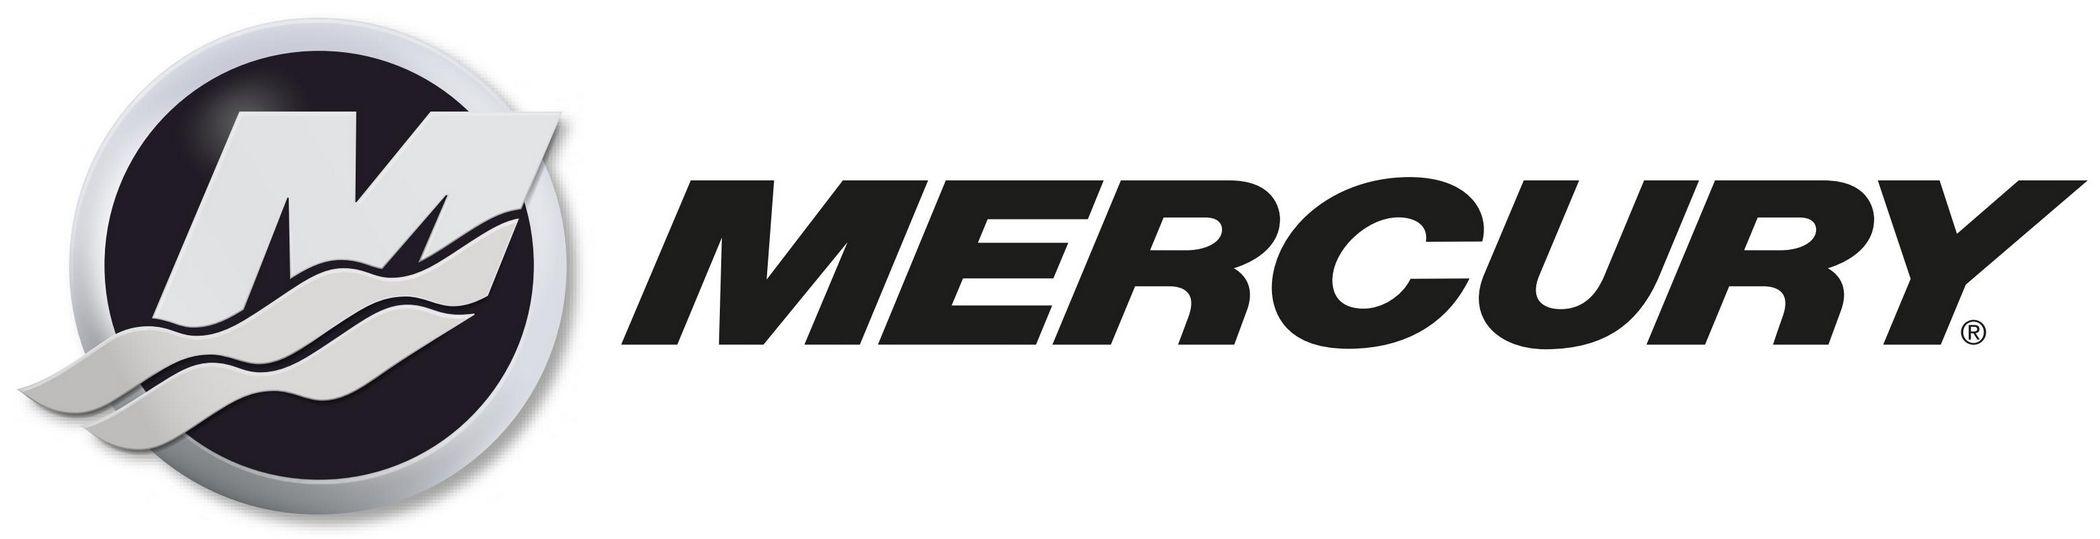 Mercury Boat Logo - Southern California's Mercury Marine - Pro Boats